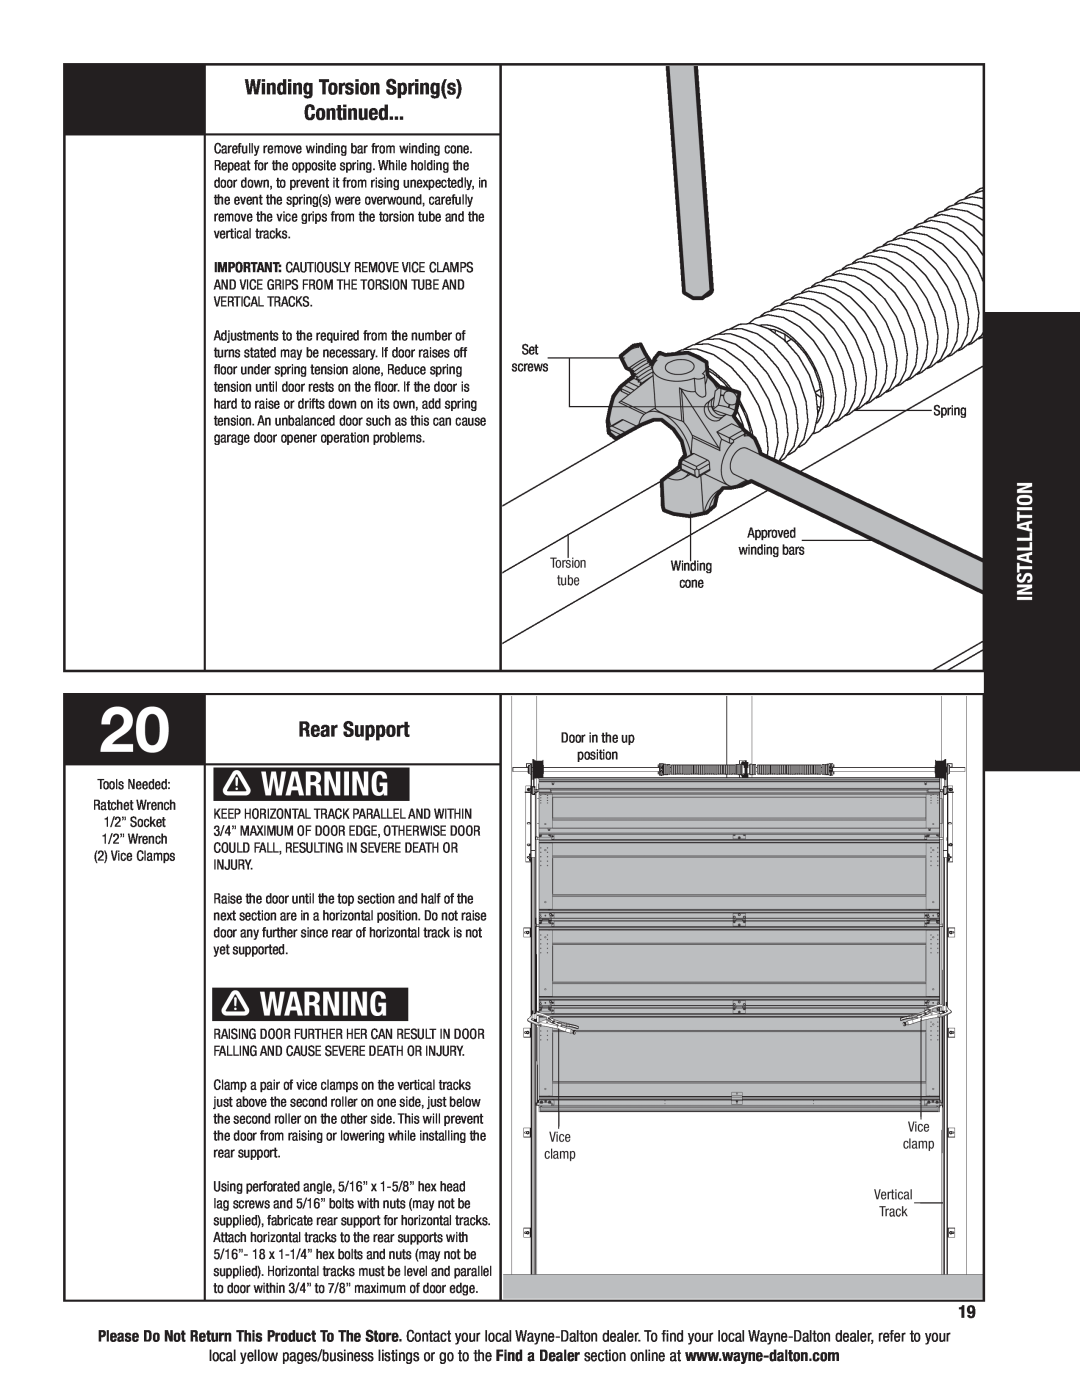 Wayne-Dalton 6100 installation instructions Continued, Rear Support, Winding Torsion Springs, Installation 